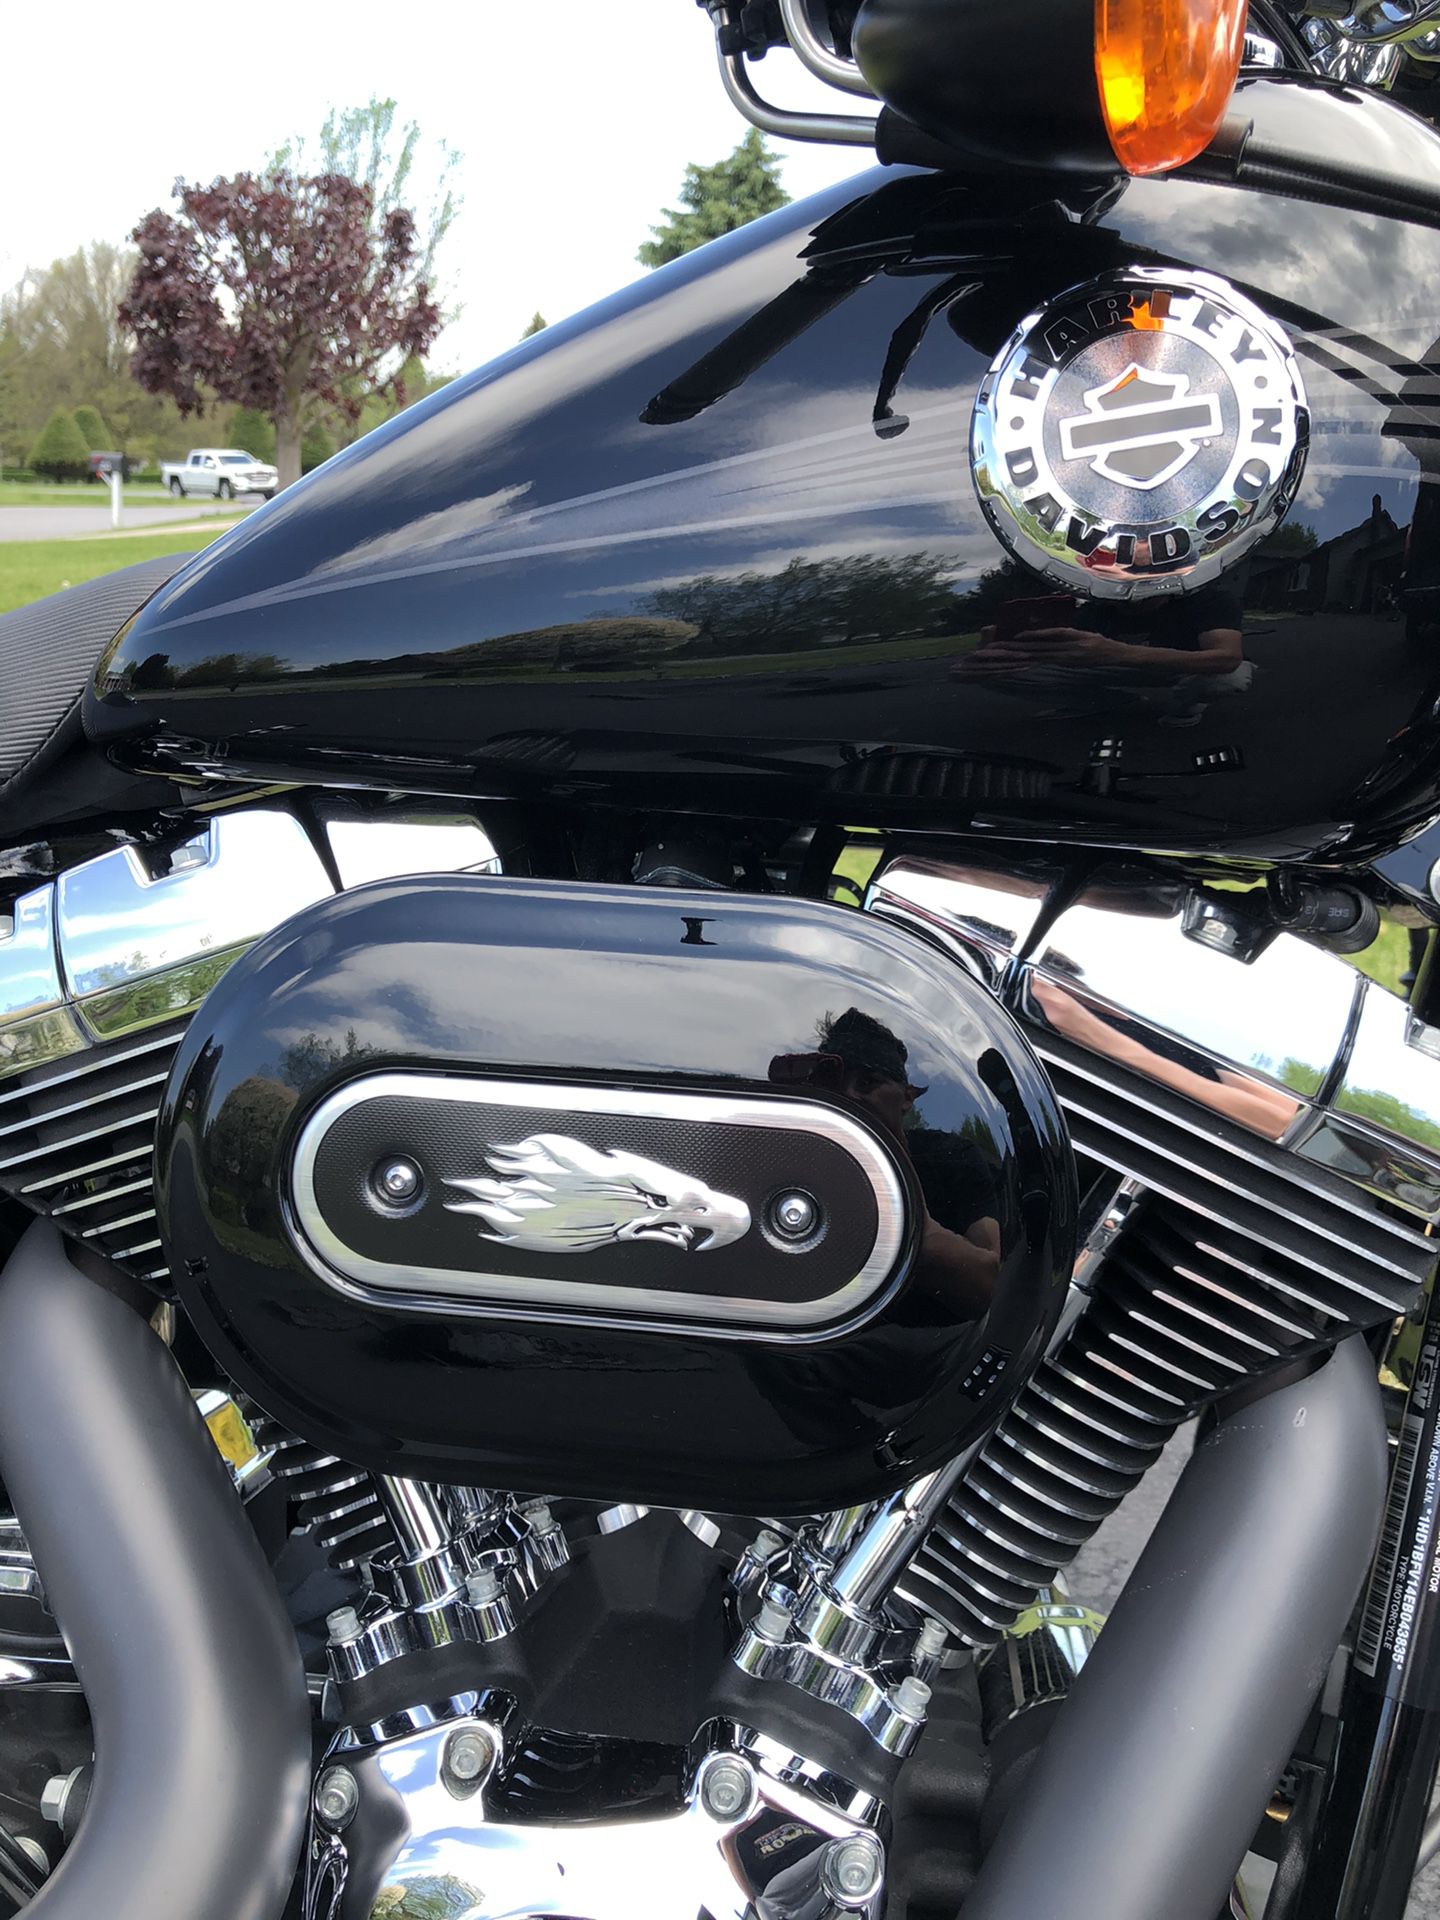 Photo 2014 Harley Davidson Breakout